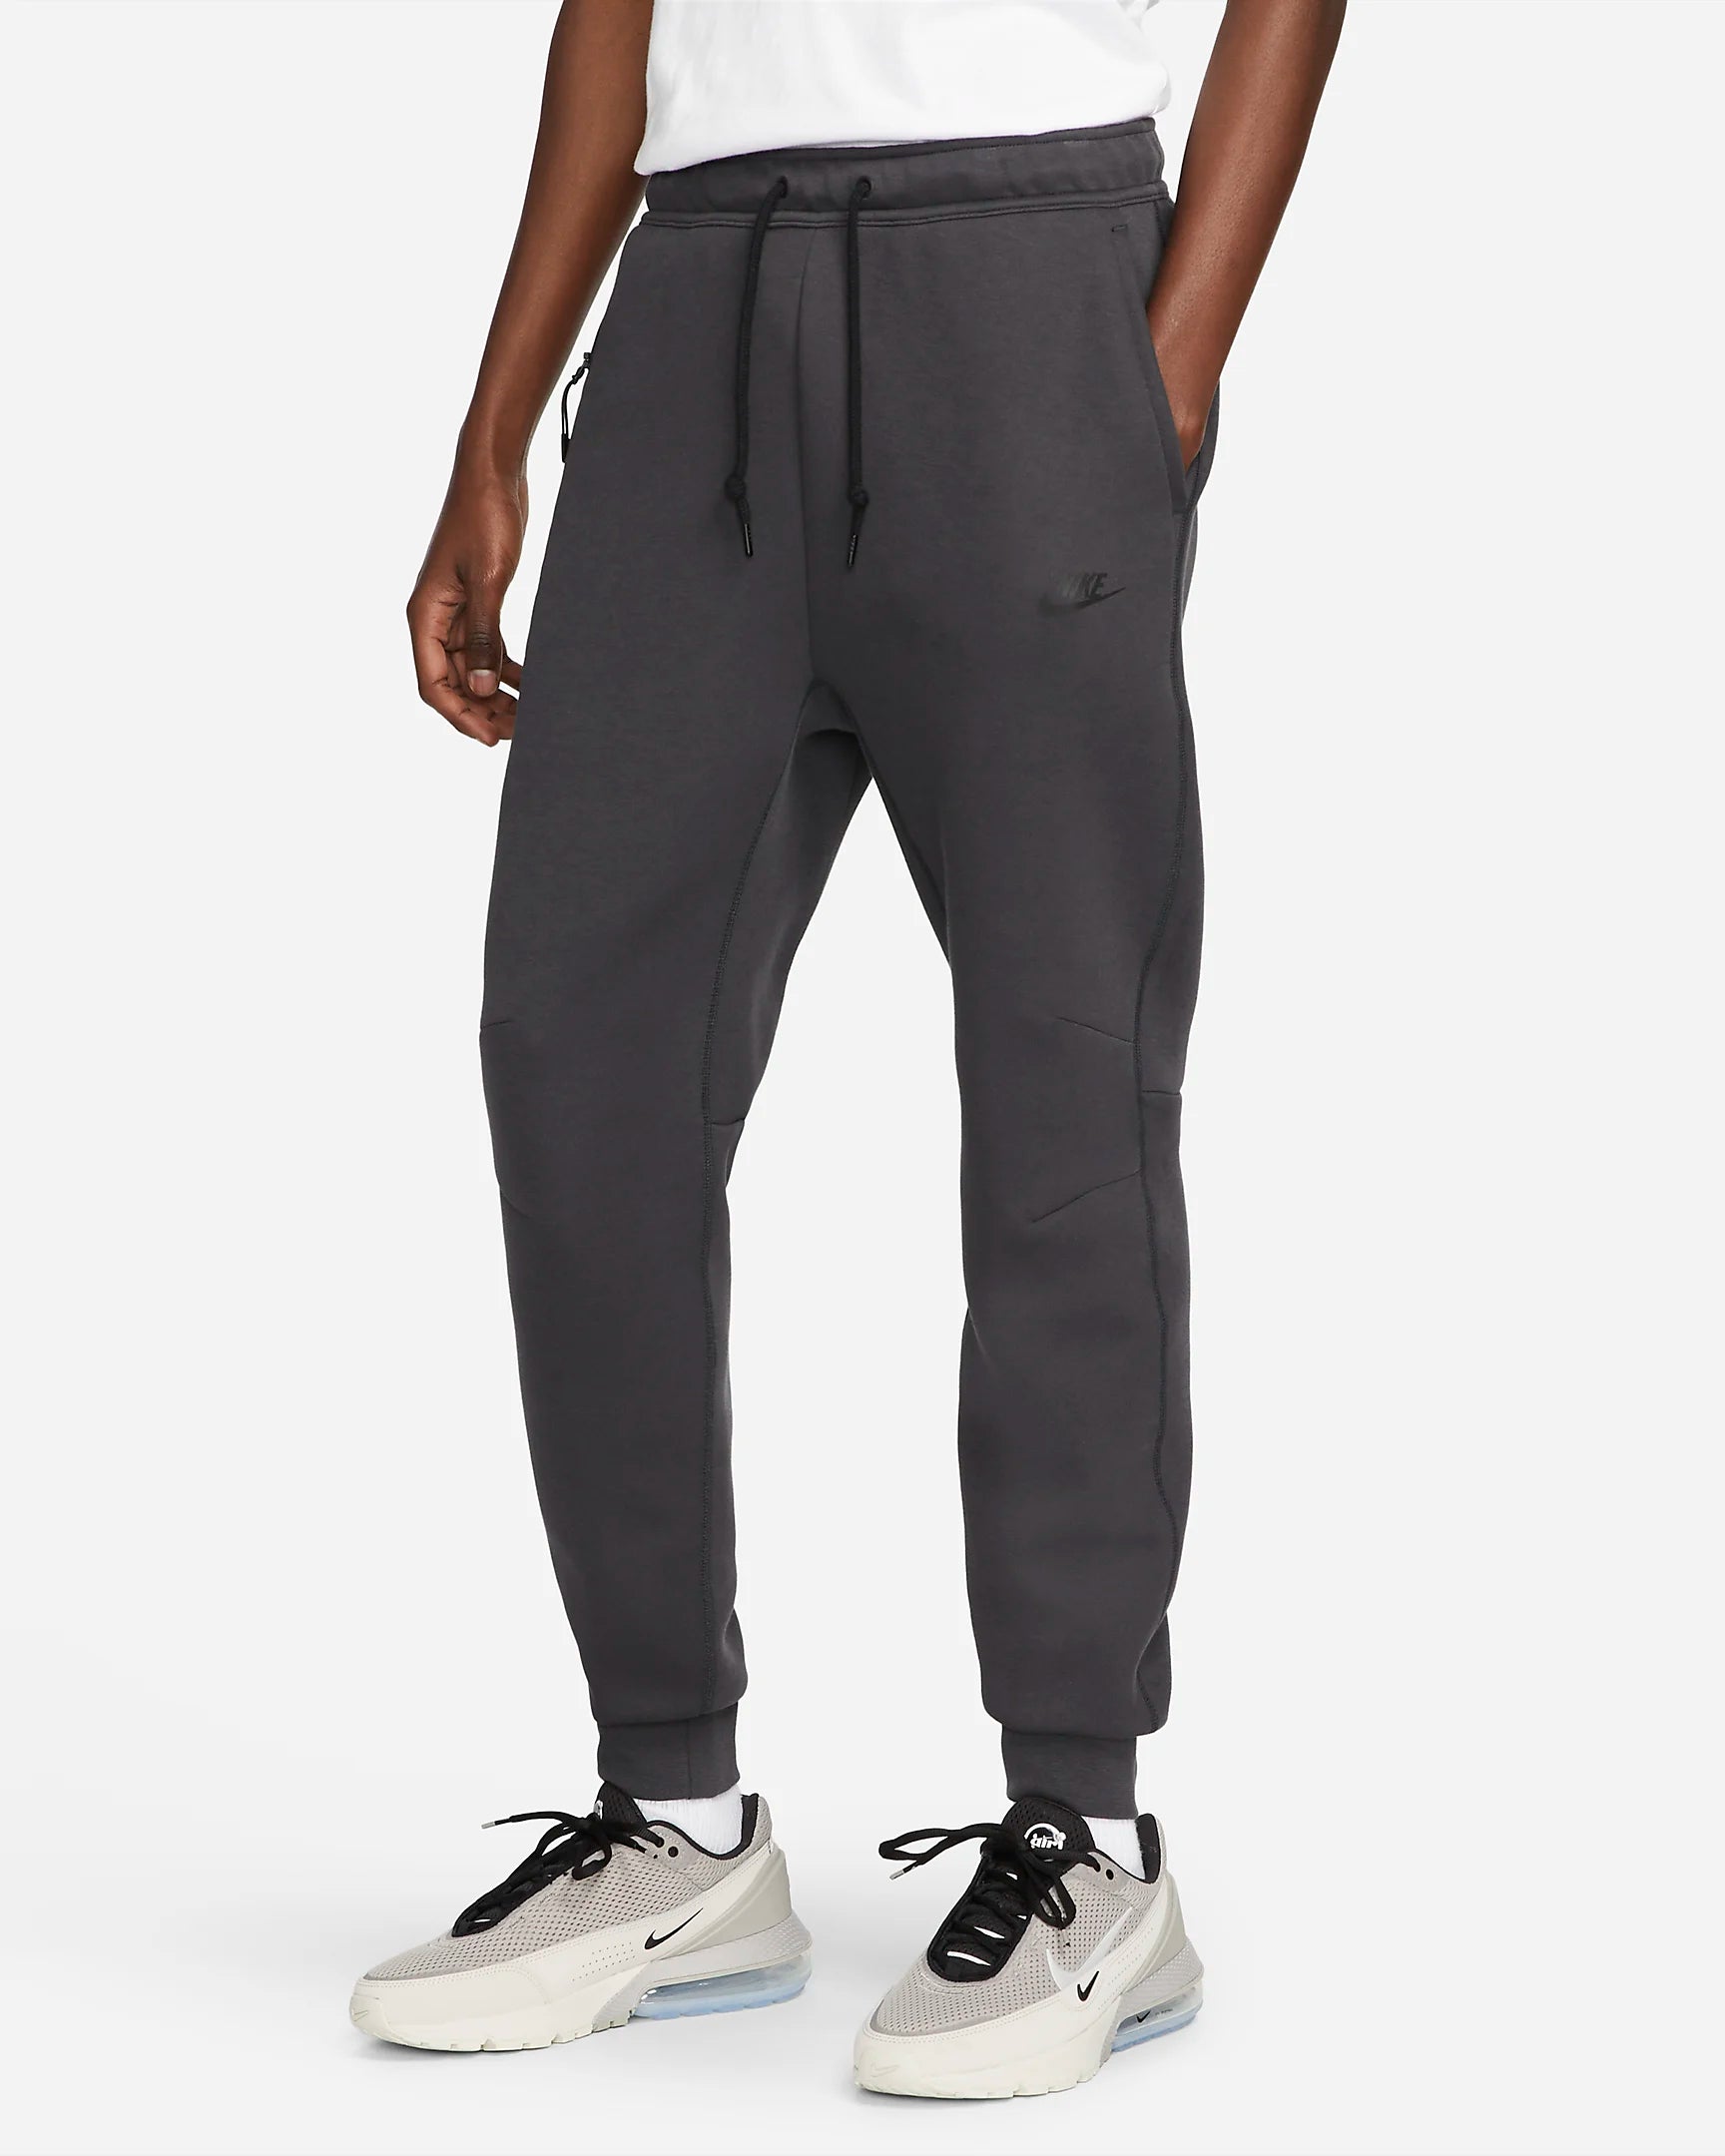 Nike Tech Fleece Pants - Black/Charcoal Gray